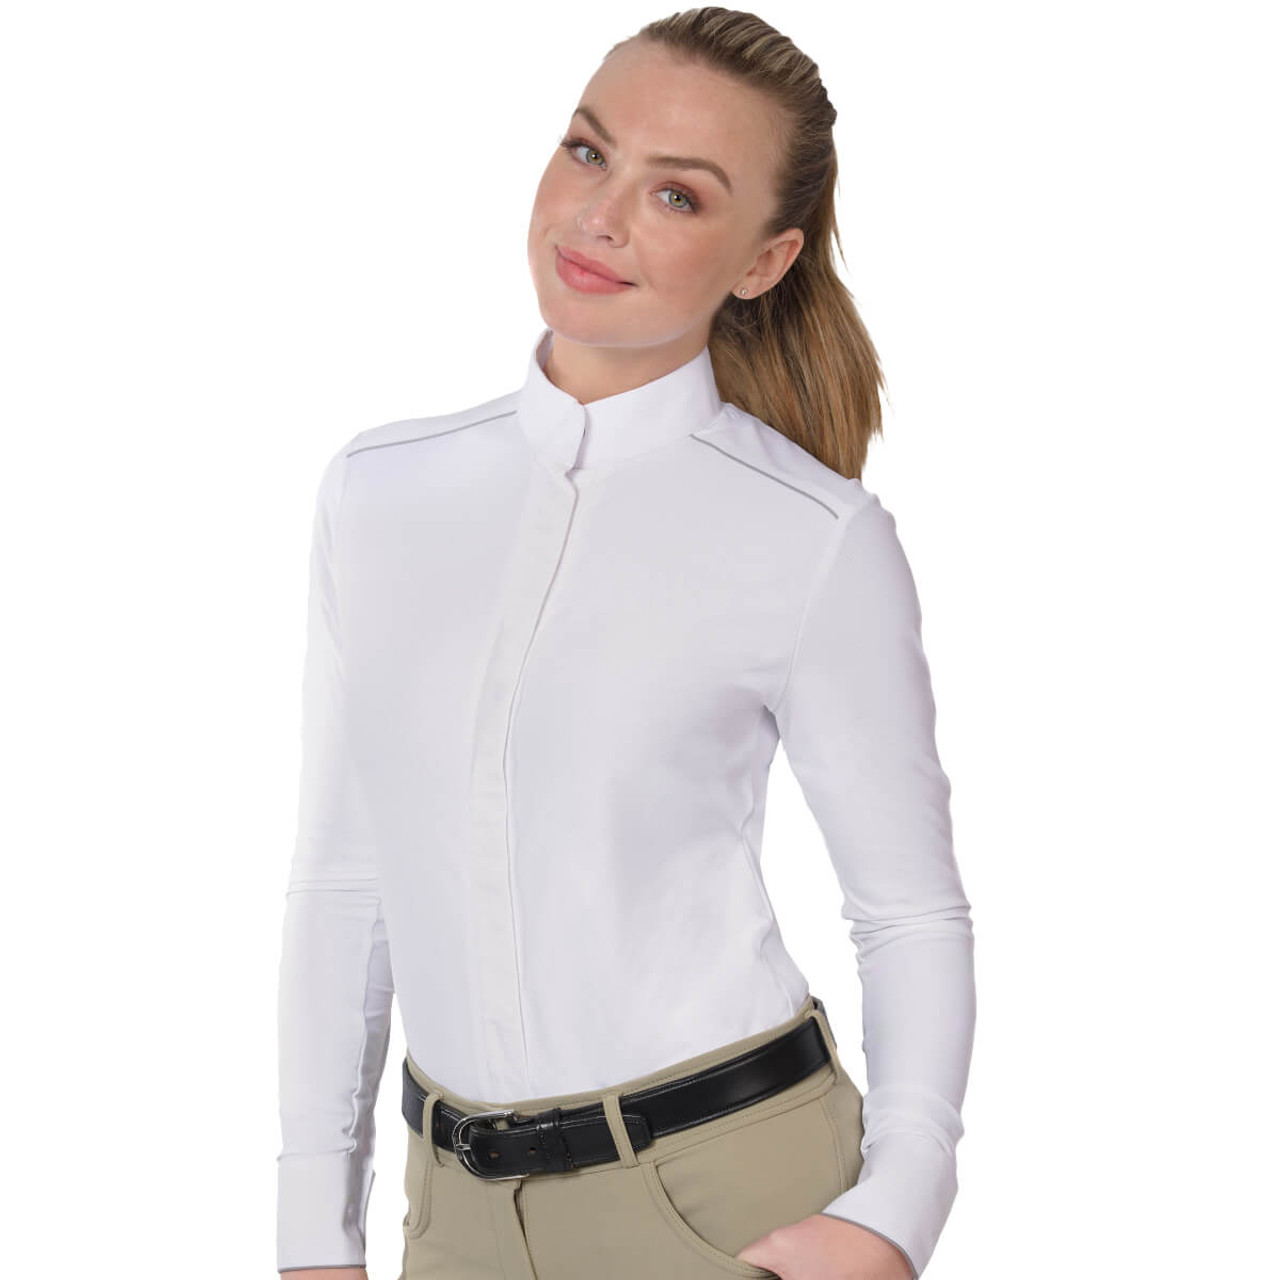 Ovation Ladies' Long Sleeve Performance Shirt - white w/grey